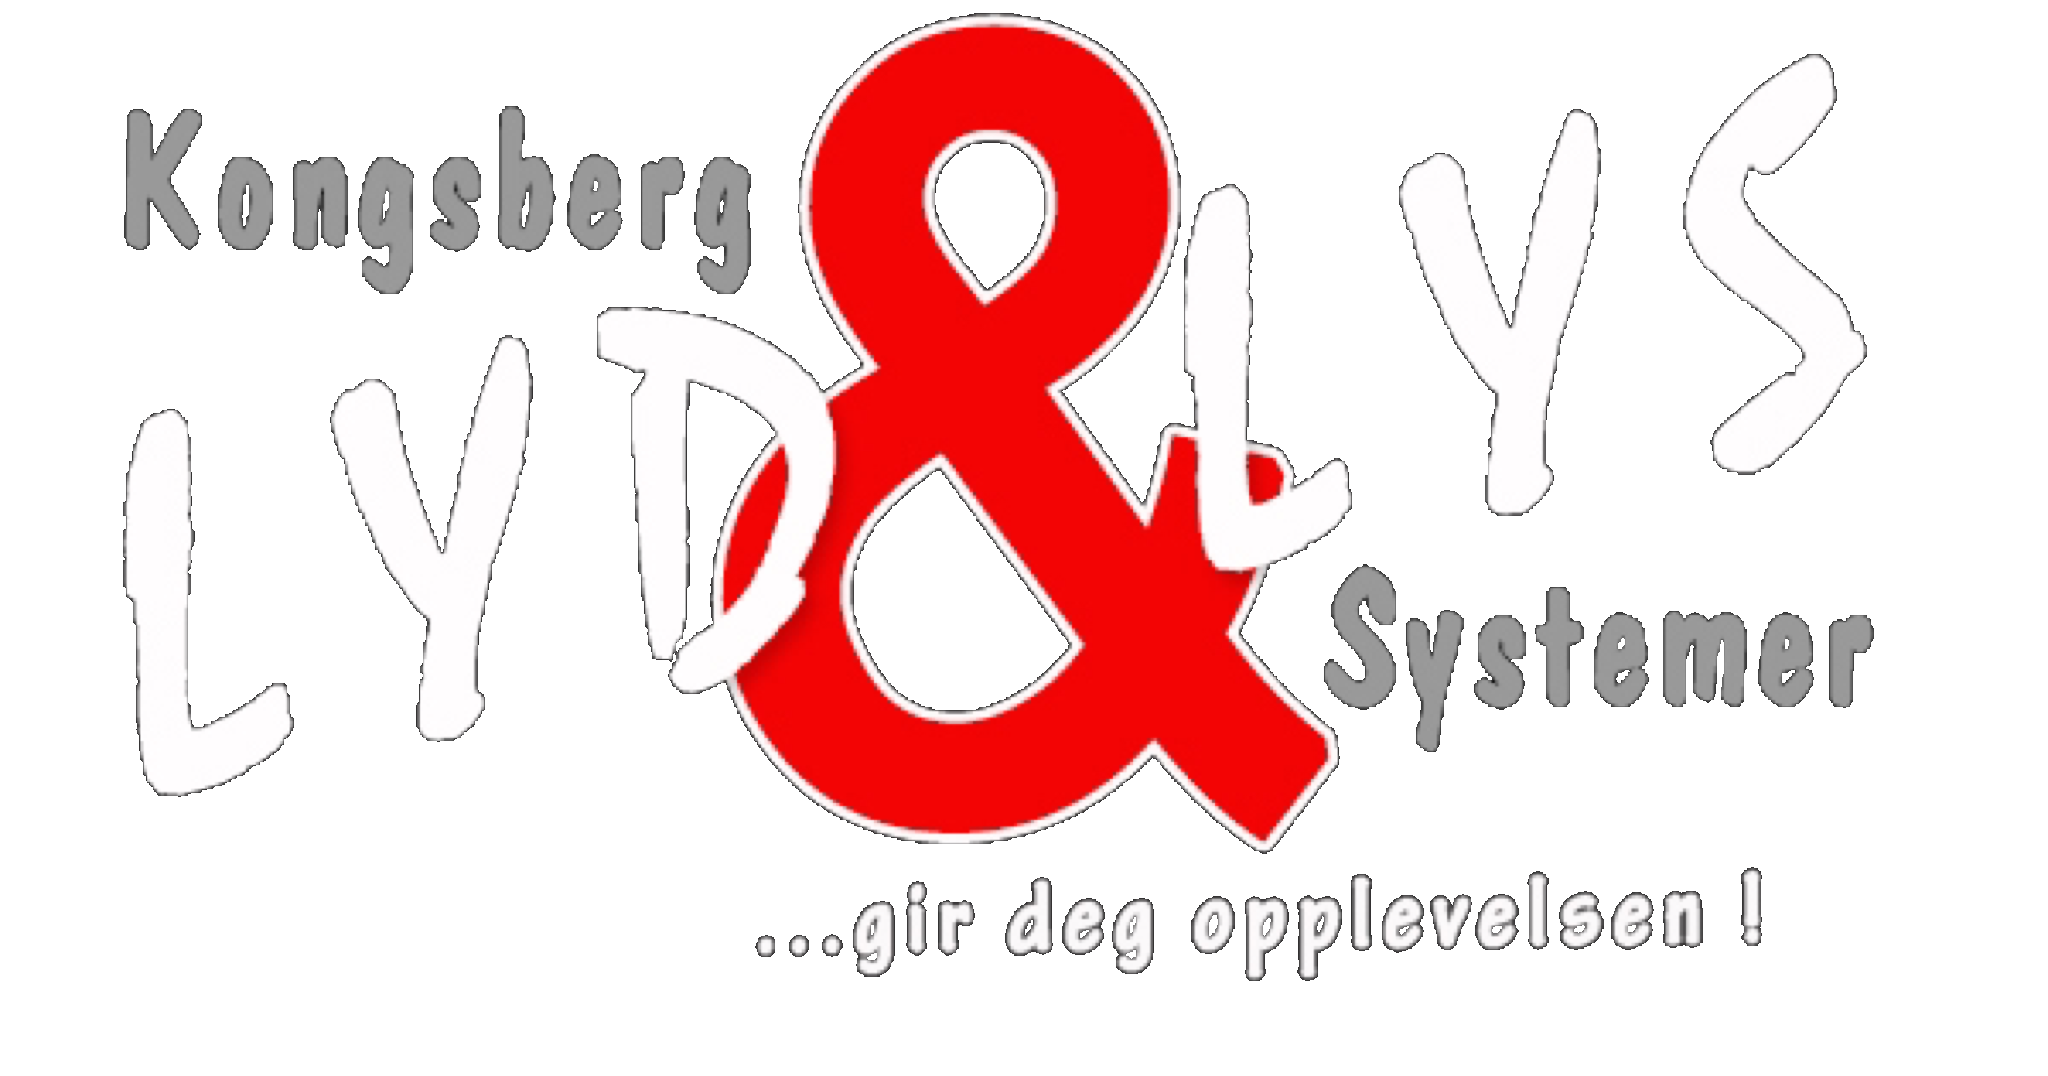 Kongsberg Lyd & Lys Systemer AS